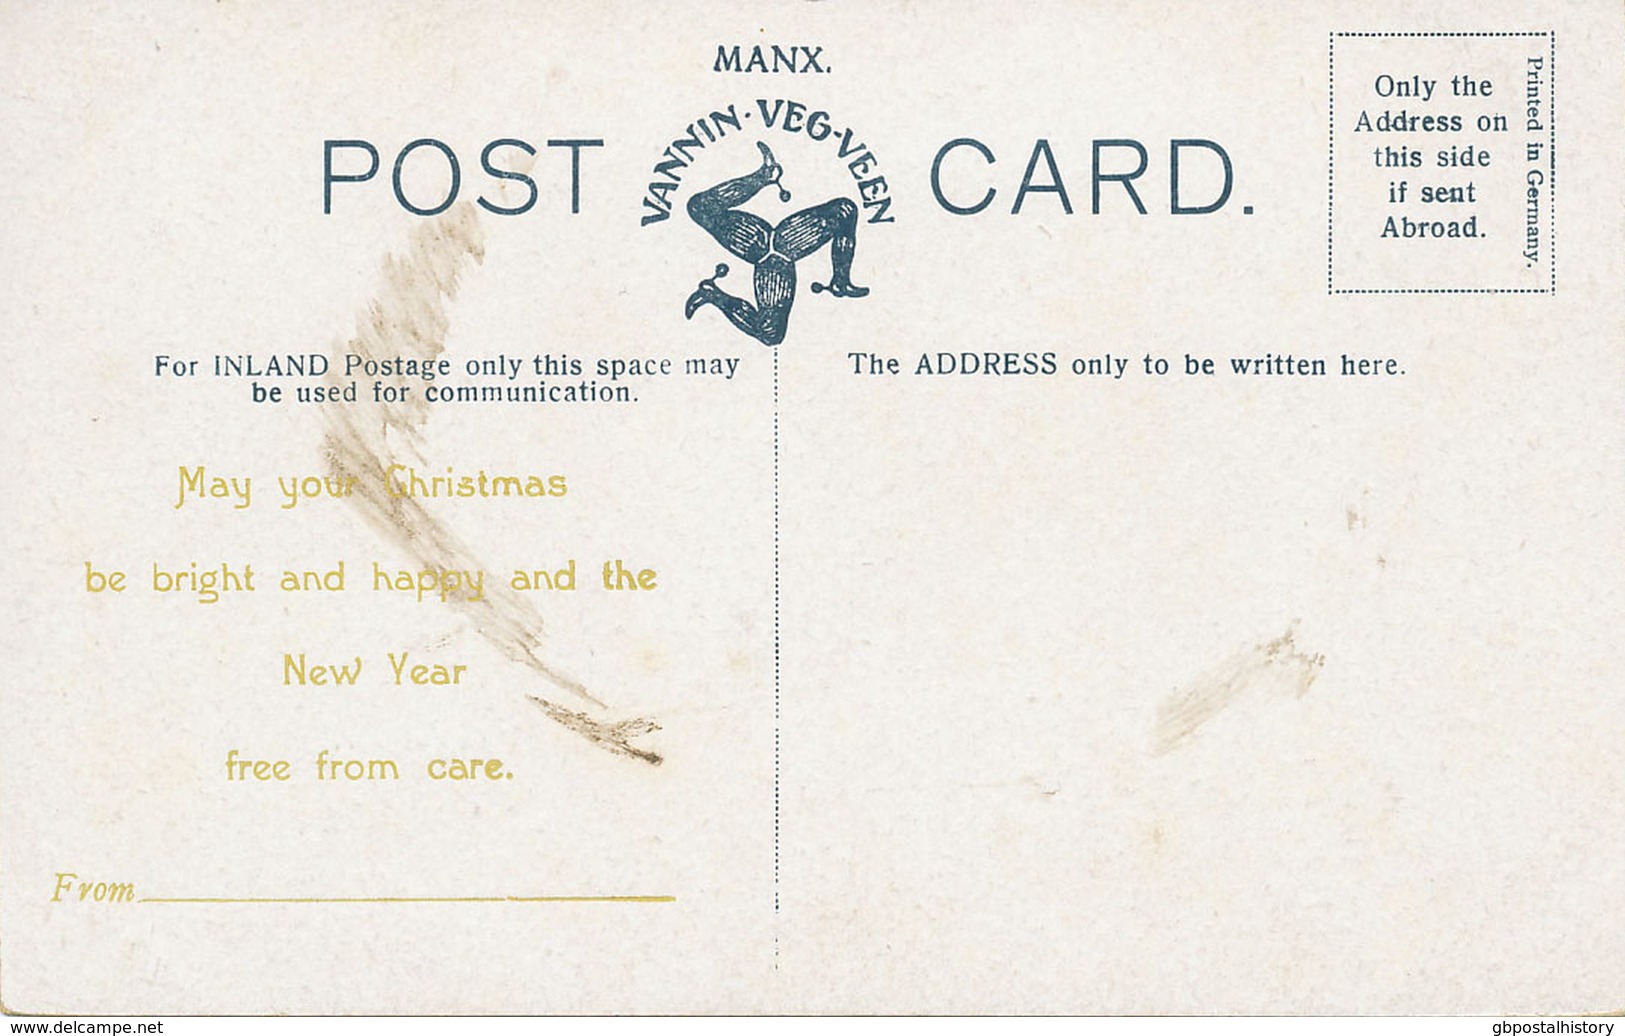 UK BRADDAN, Ca. 1910, Very Fine Mint Coloured Postcard "Sunday Service At Braddan", On The Backside Christmas Wishes - Insel Man